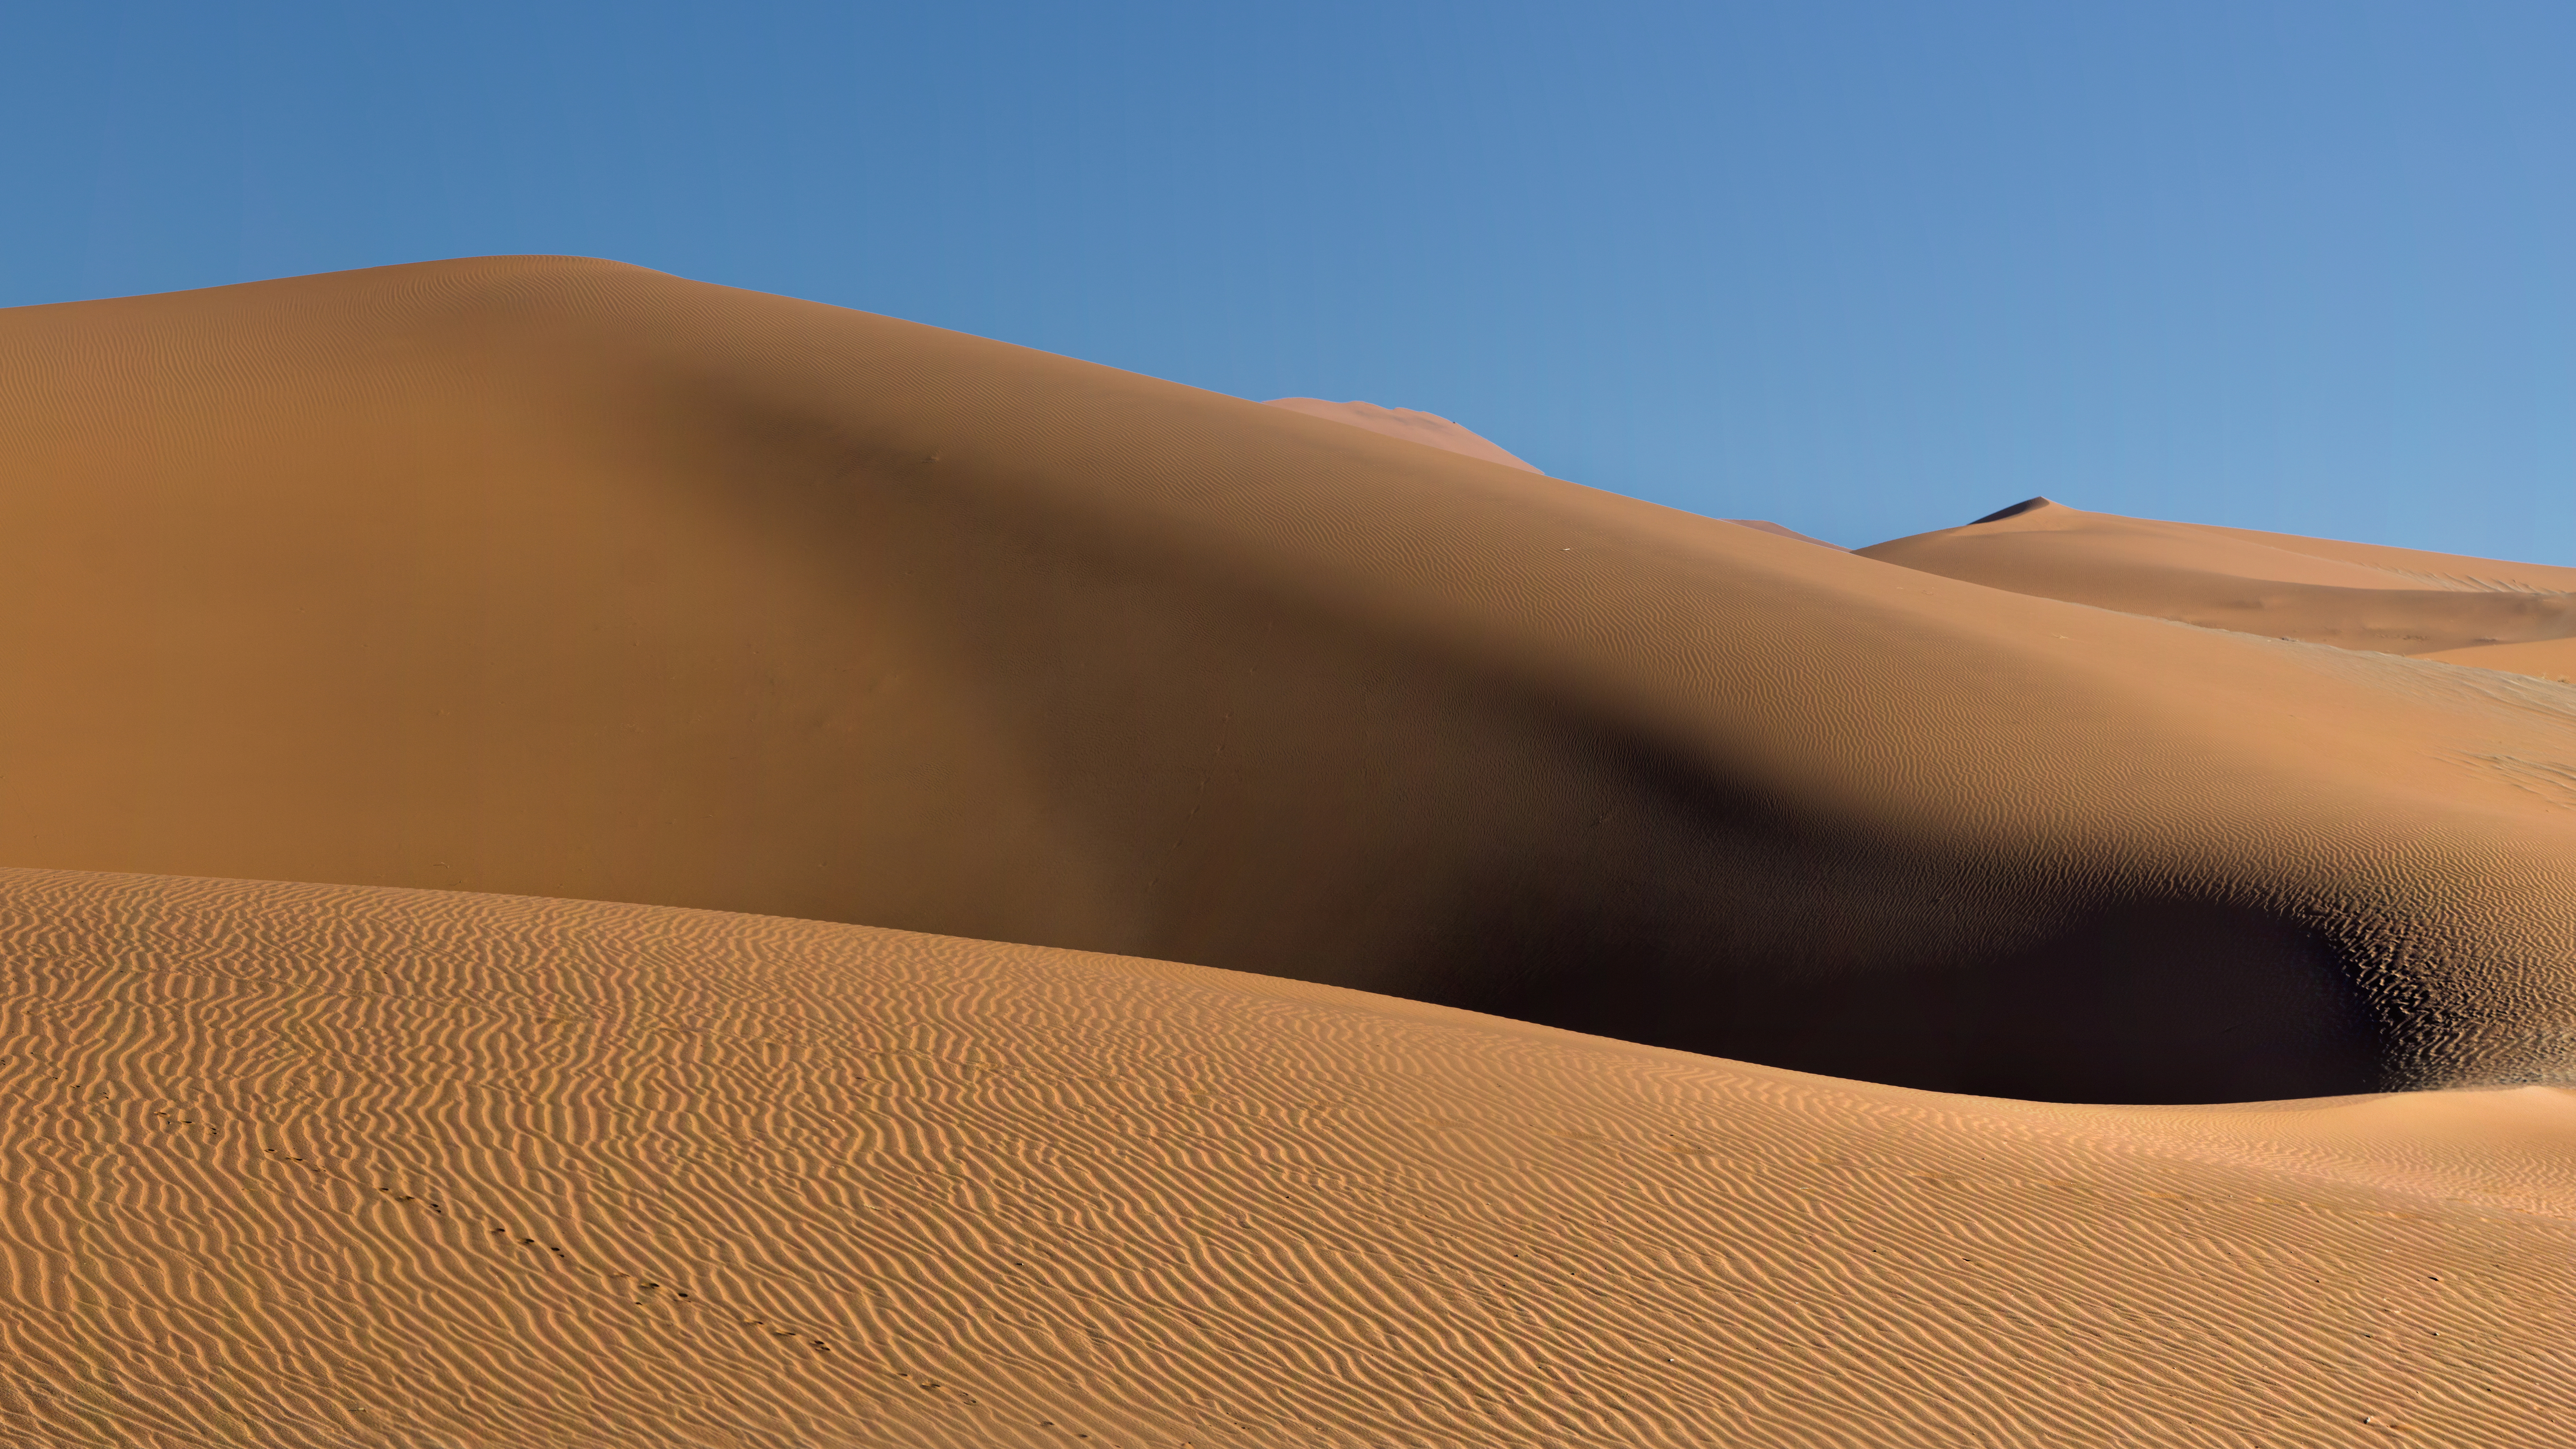 General 7680x4320 Trey Ratcliff photography Africa Namibia sand dunes desert sand ripples